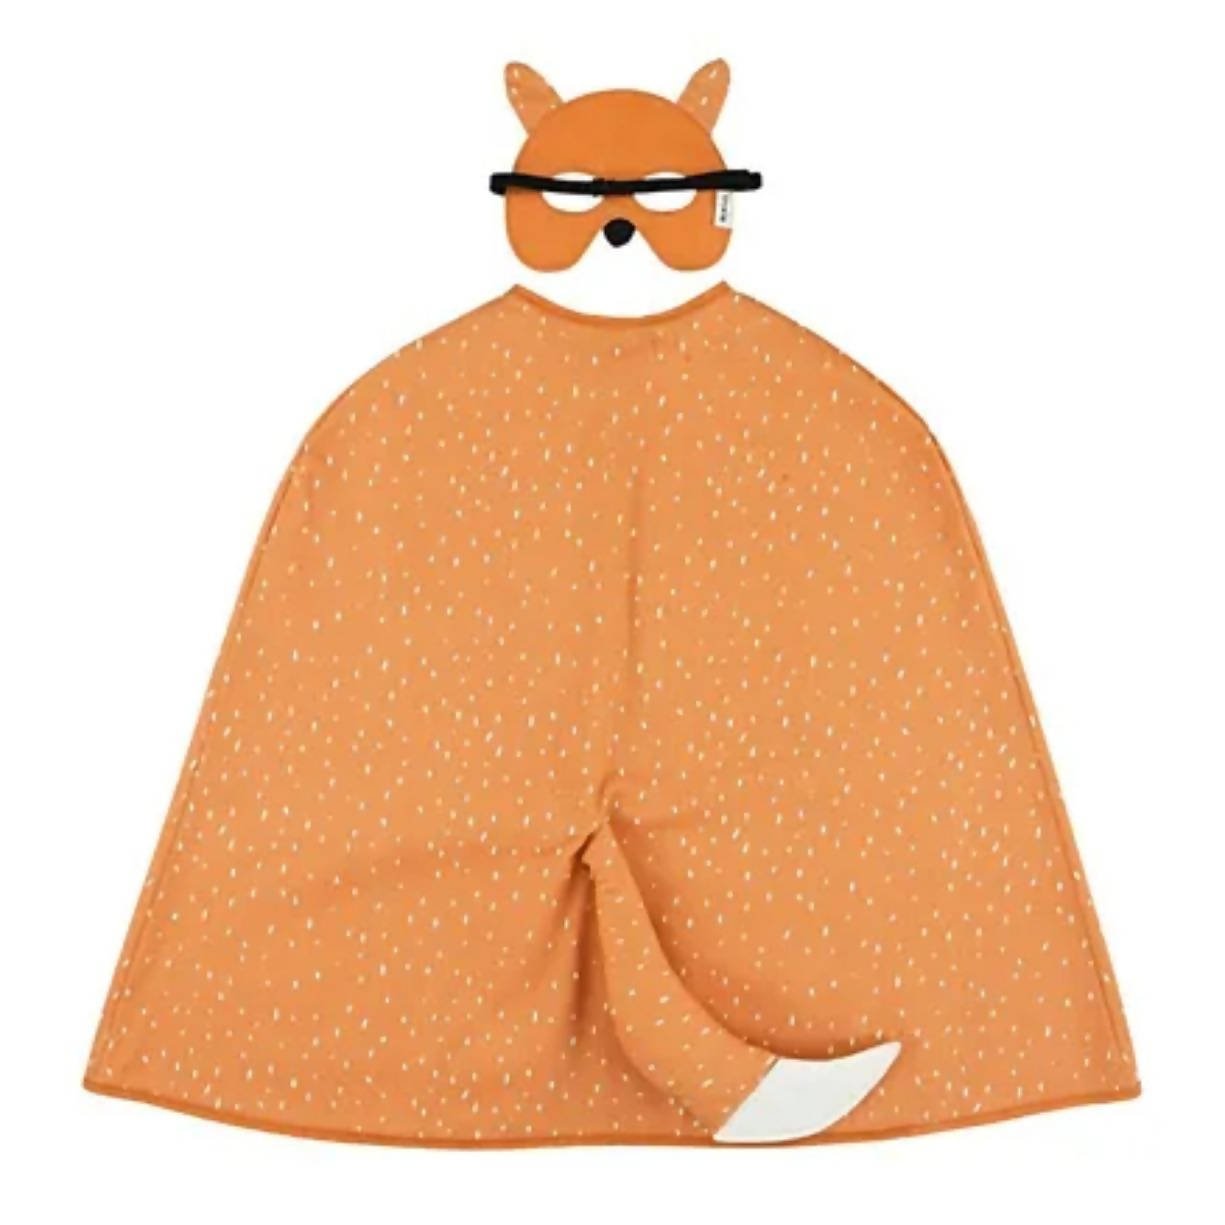 cute fox mask and cape